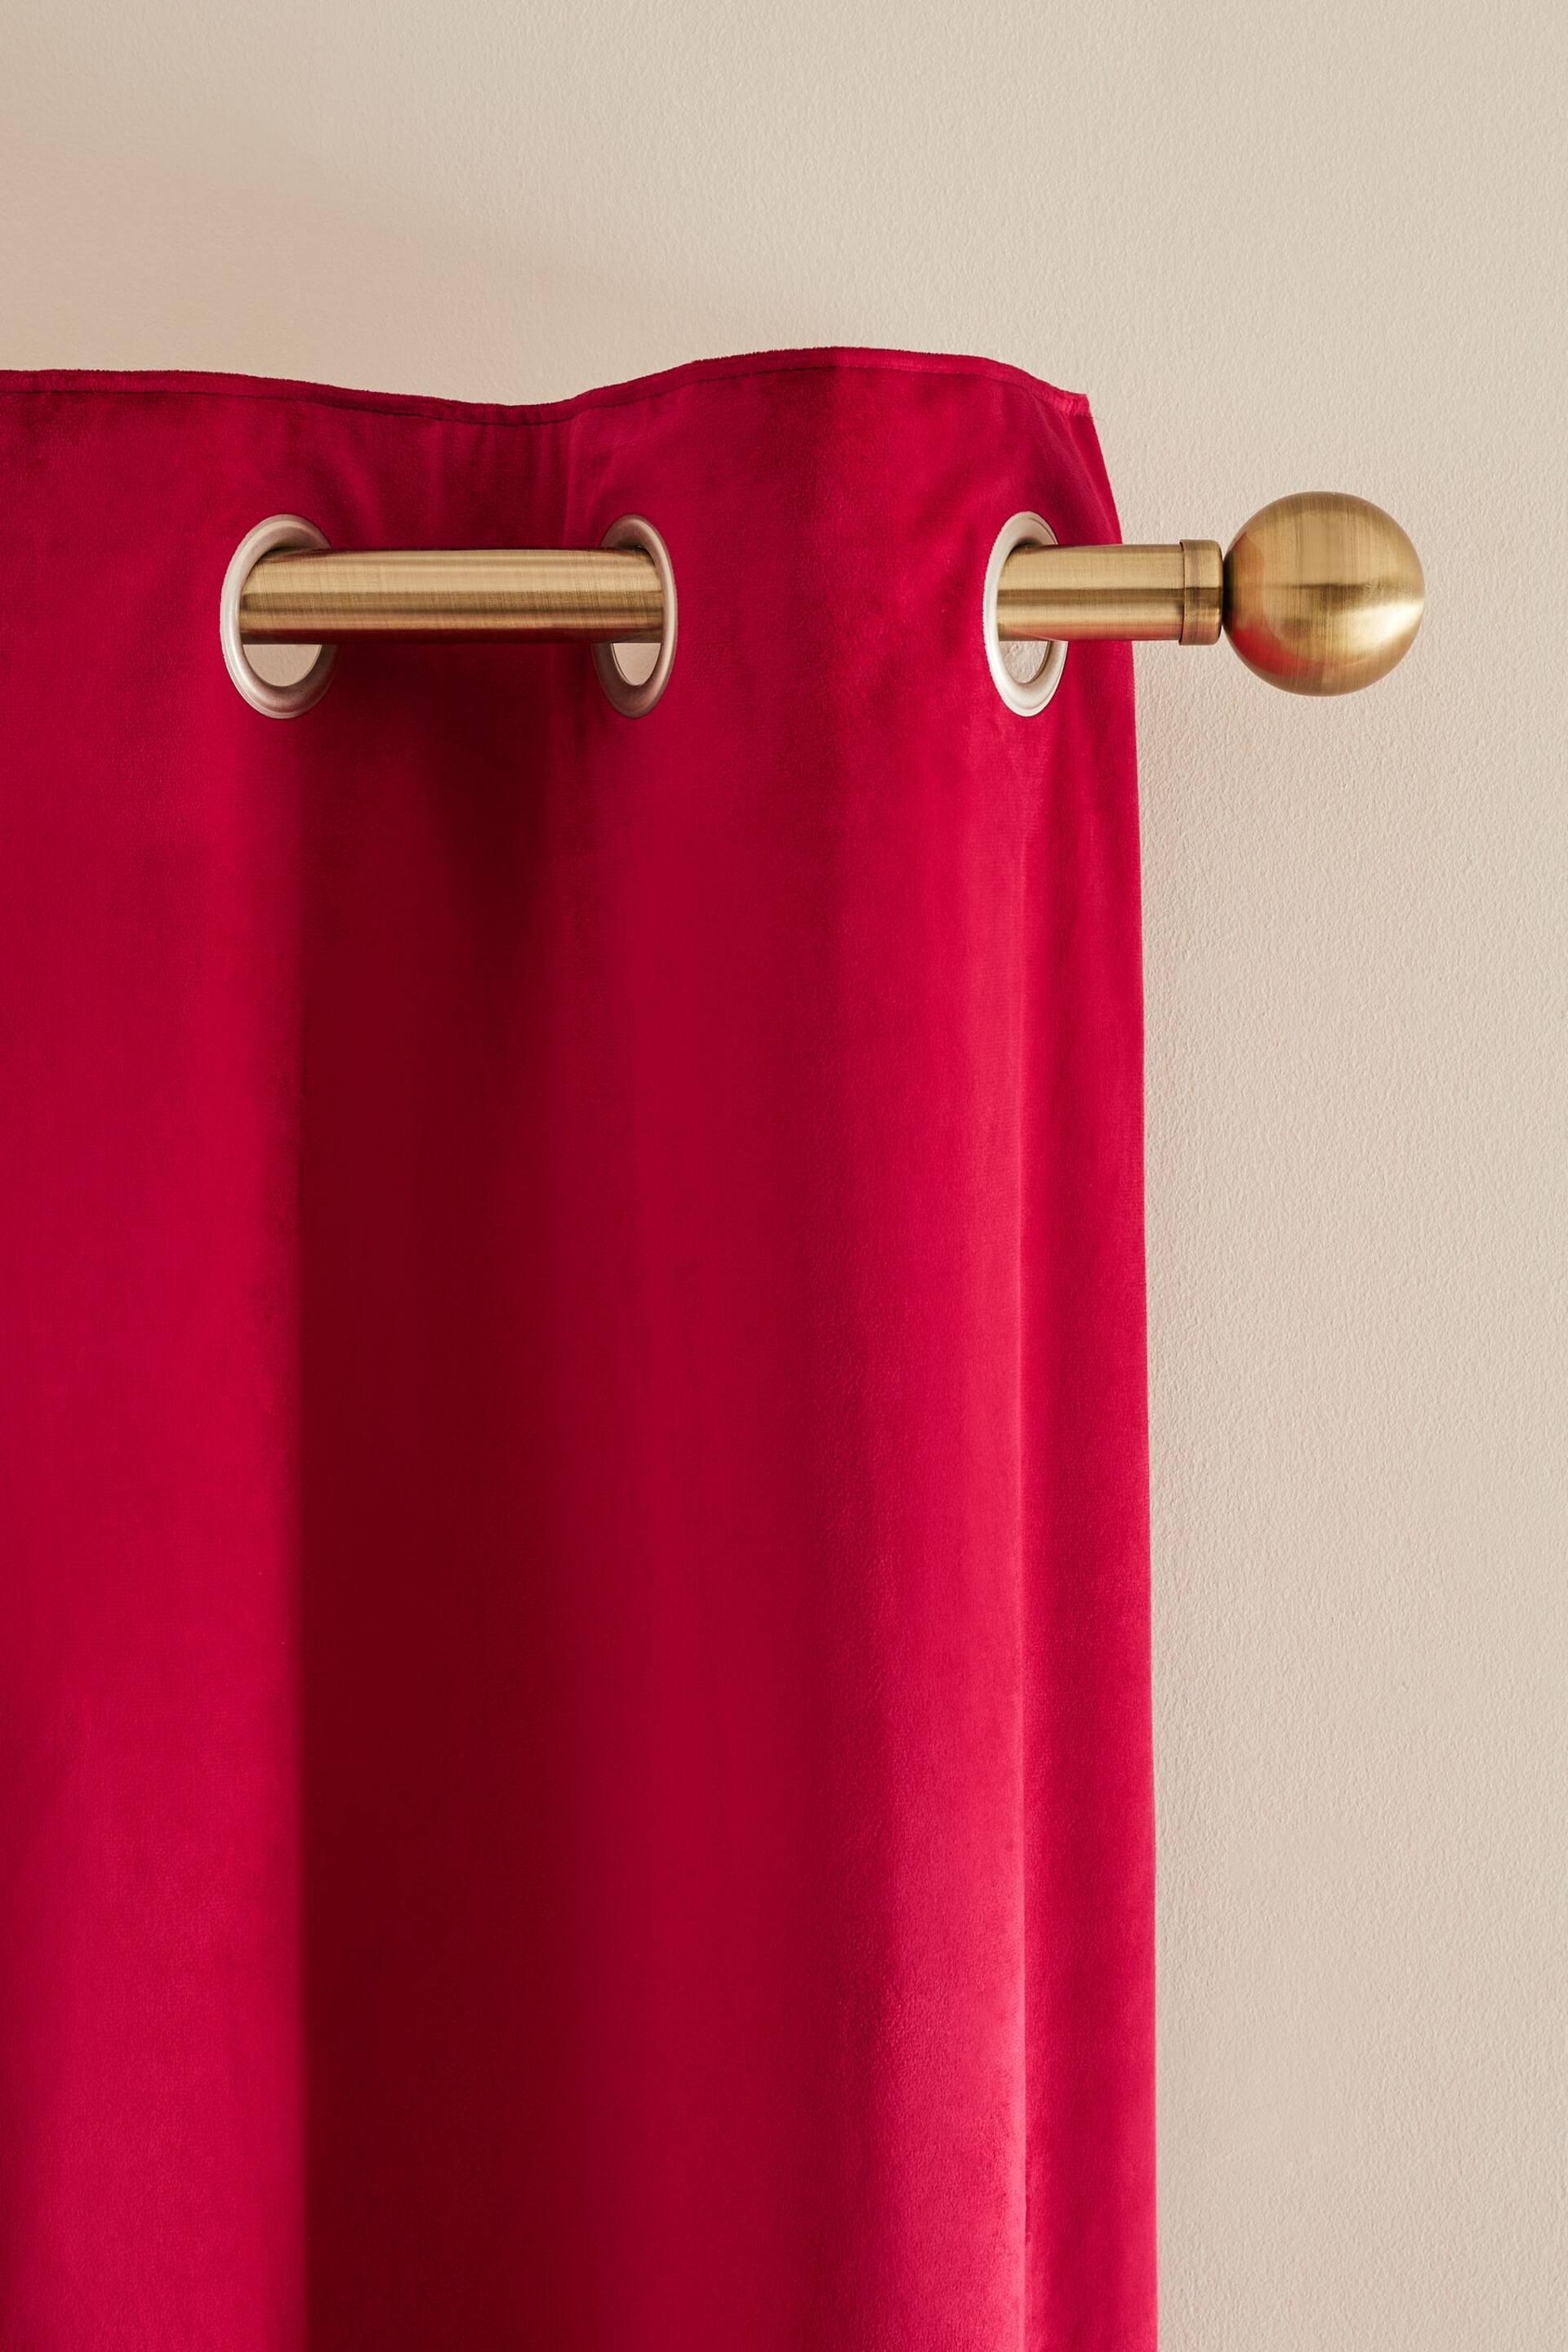 Red Matte Velvet Lined Eyelet Curtains - Image 5 of 6